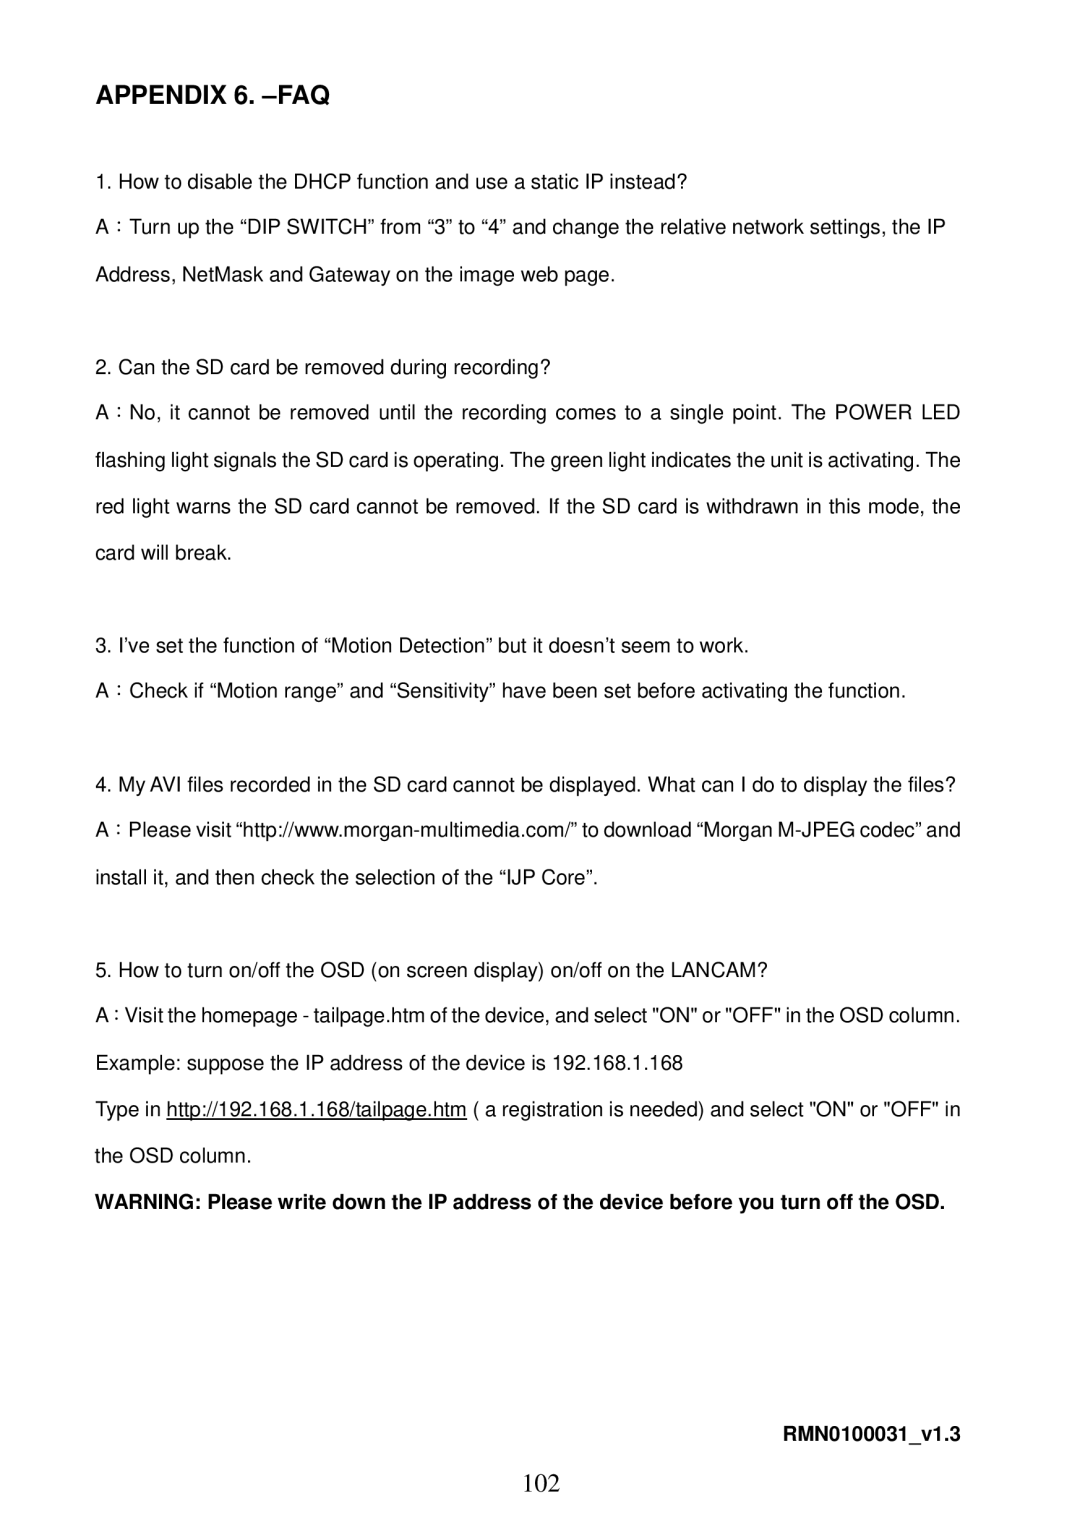 Sony MPEG4 LAN Camera operation manual Appendix 6. -FAQ, RMN0100031v1.3 